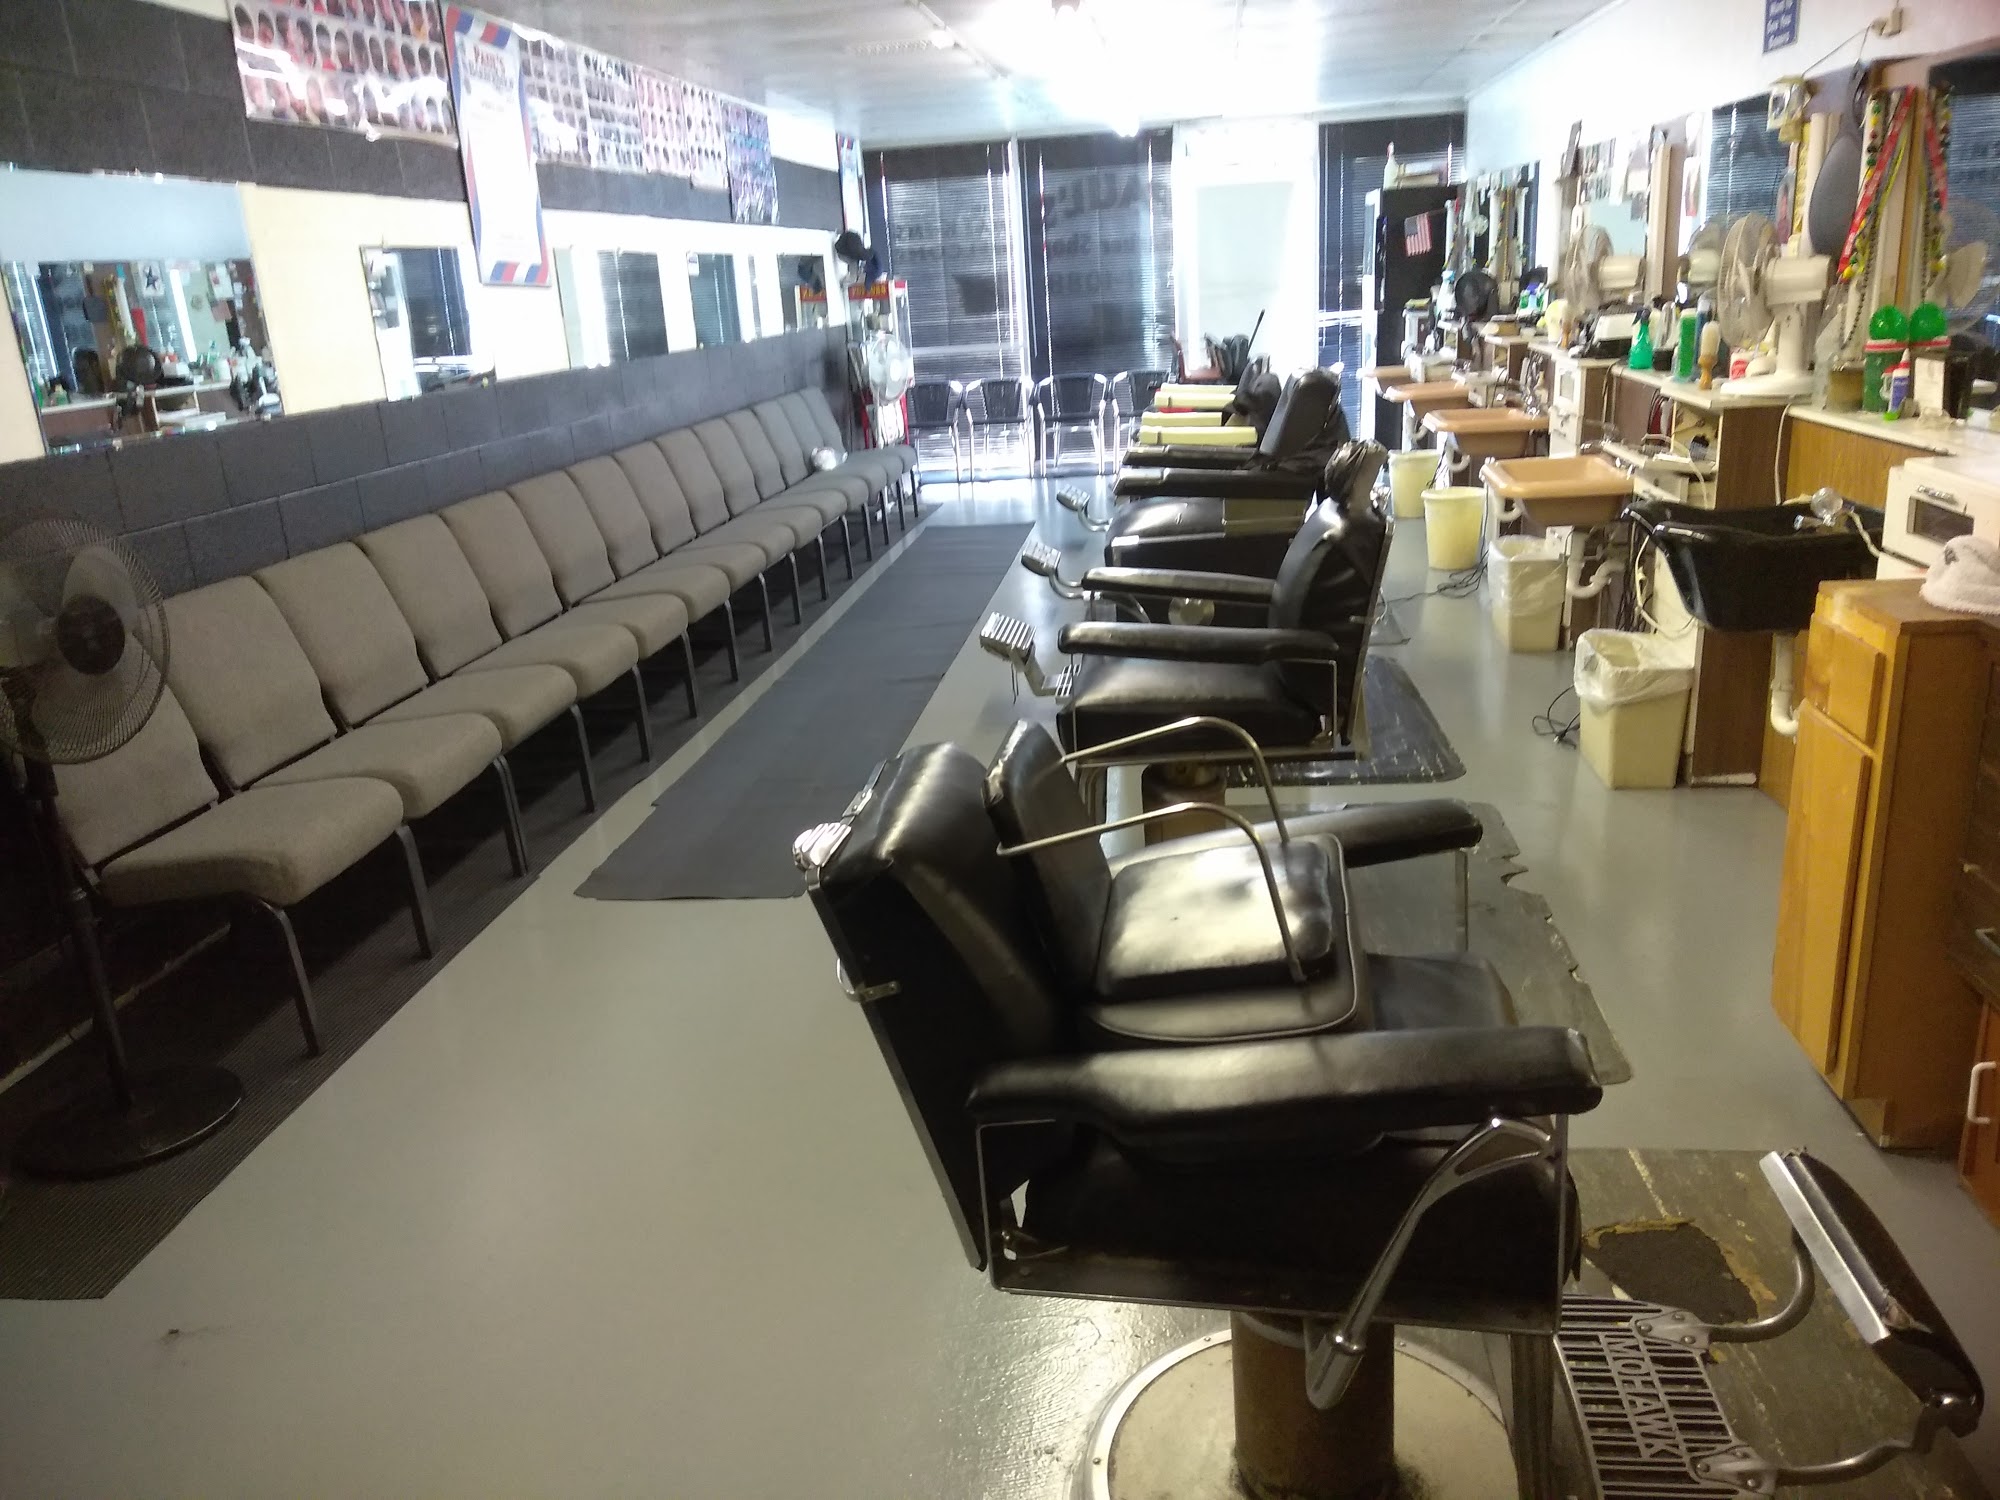 Paul's barbershop